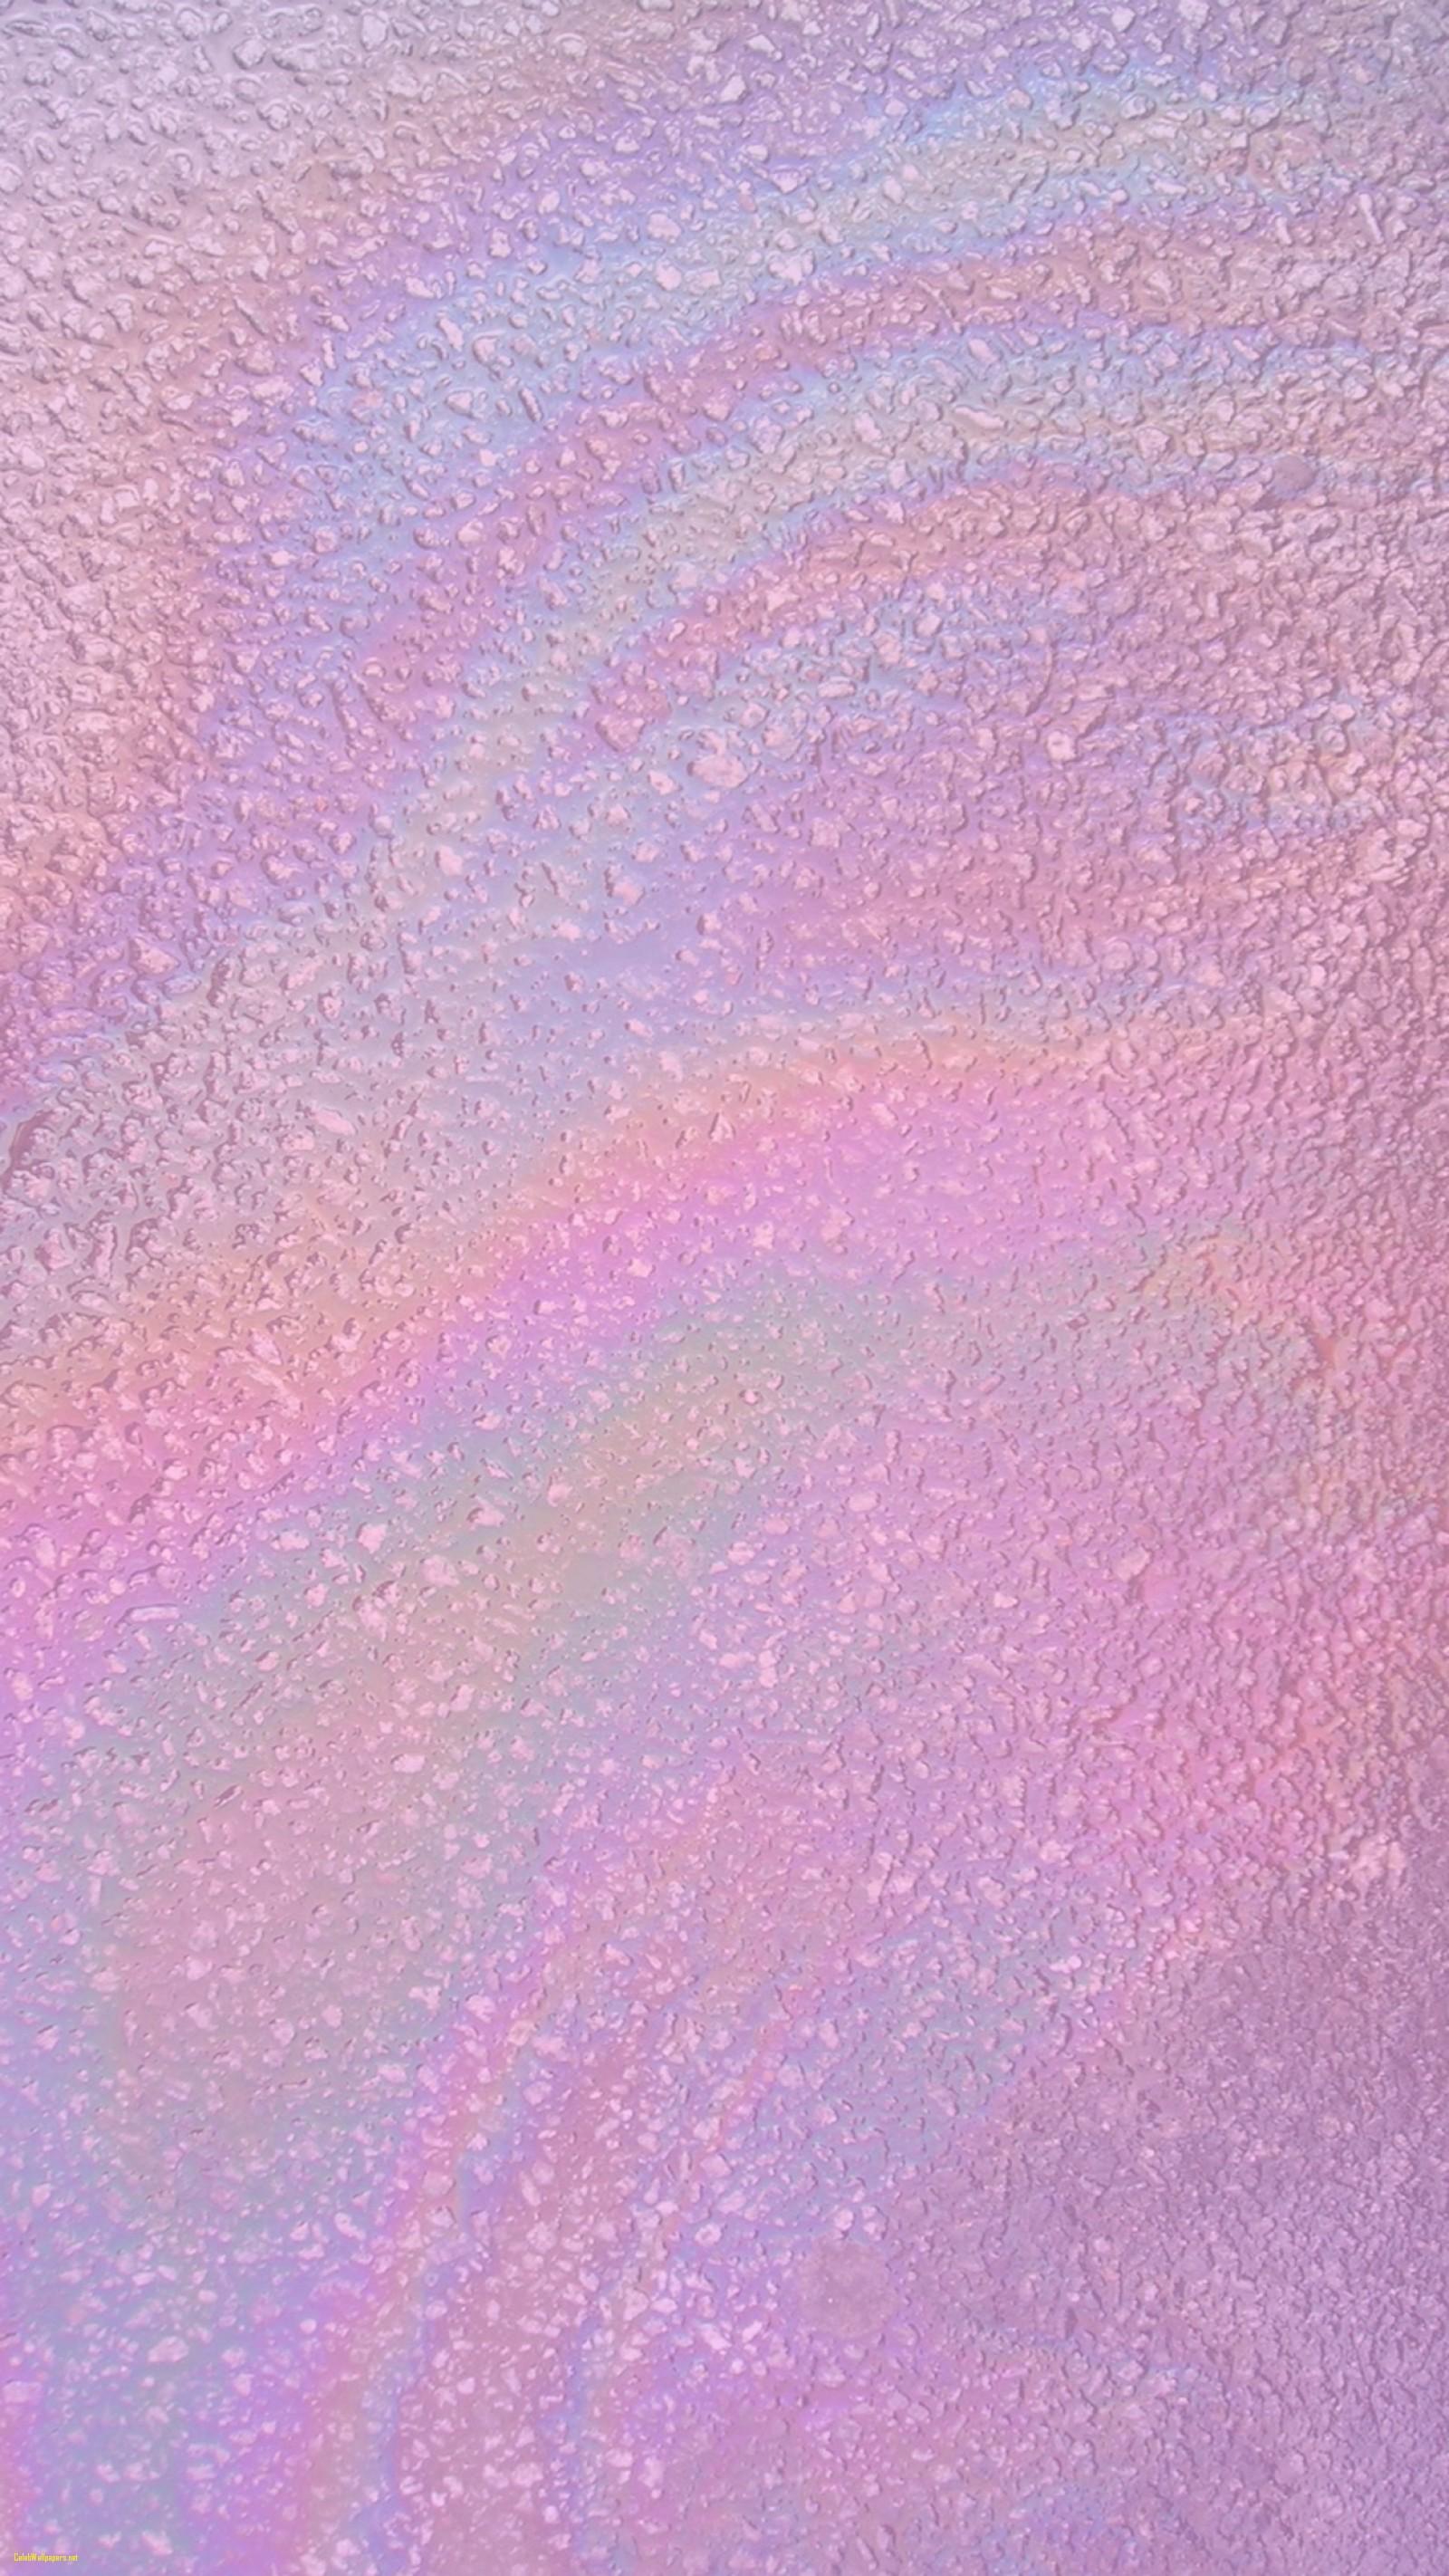 Hologram Wallpaper Hd - Pastel Pink And Purple Glitter - 1600x2844 Wallpaper  